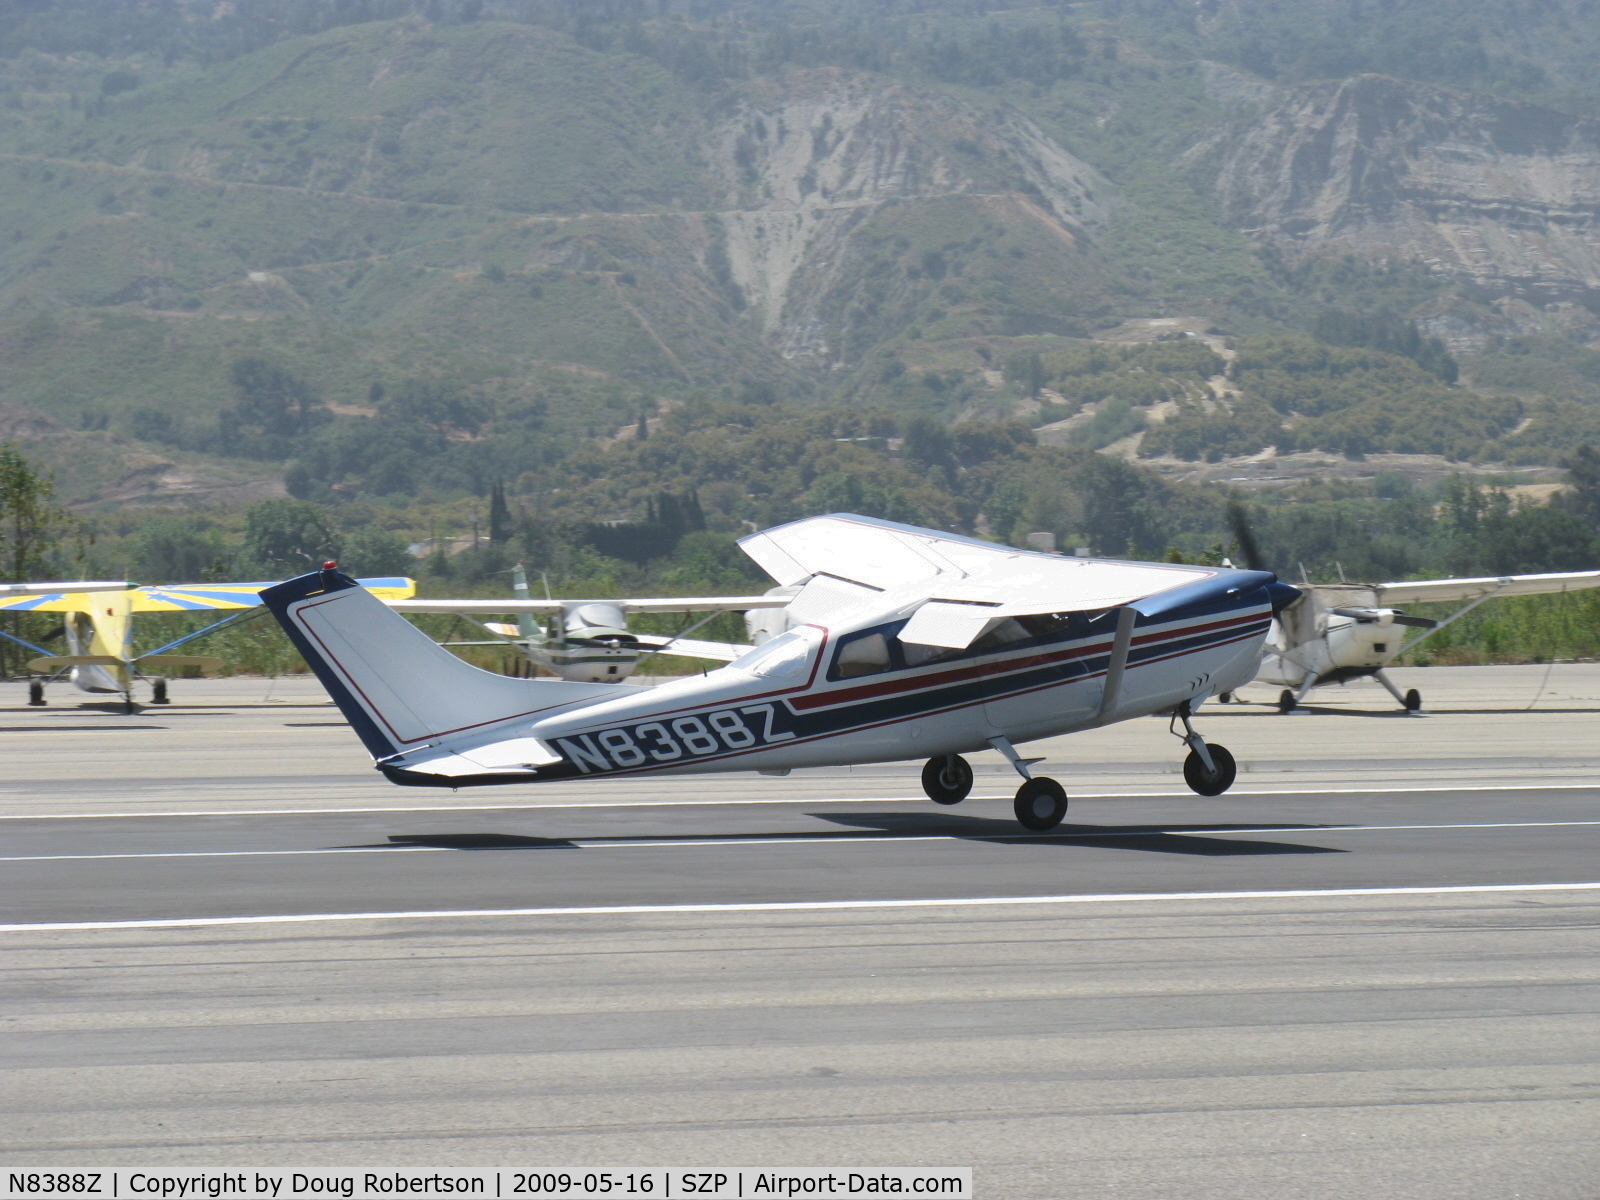 N8388Z, 1963 Cessna 210-5 C/N 205-0388, 1963 Cessna 210-5 (205) UTILINE (fixed gear version of C210) Continental IO-470-E 260 Hp, landing Rwy 22